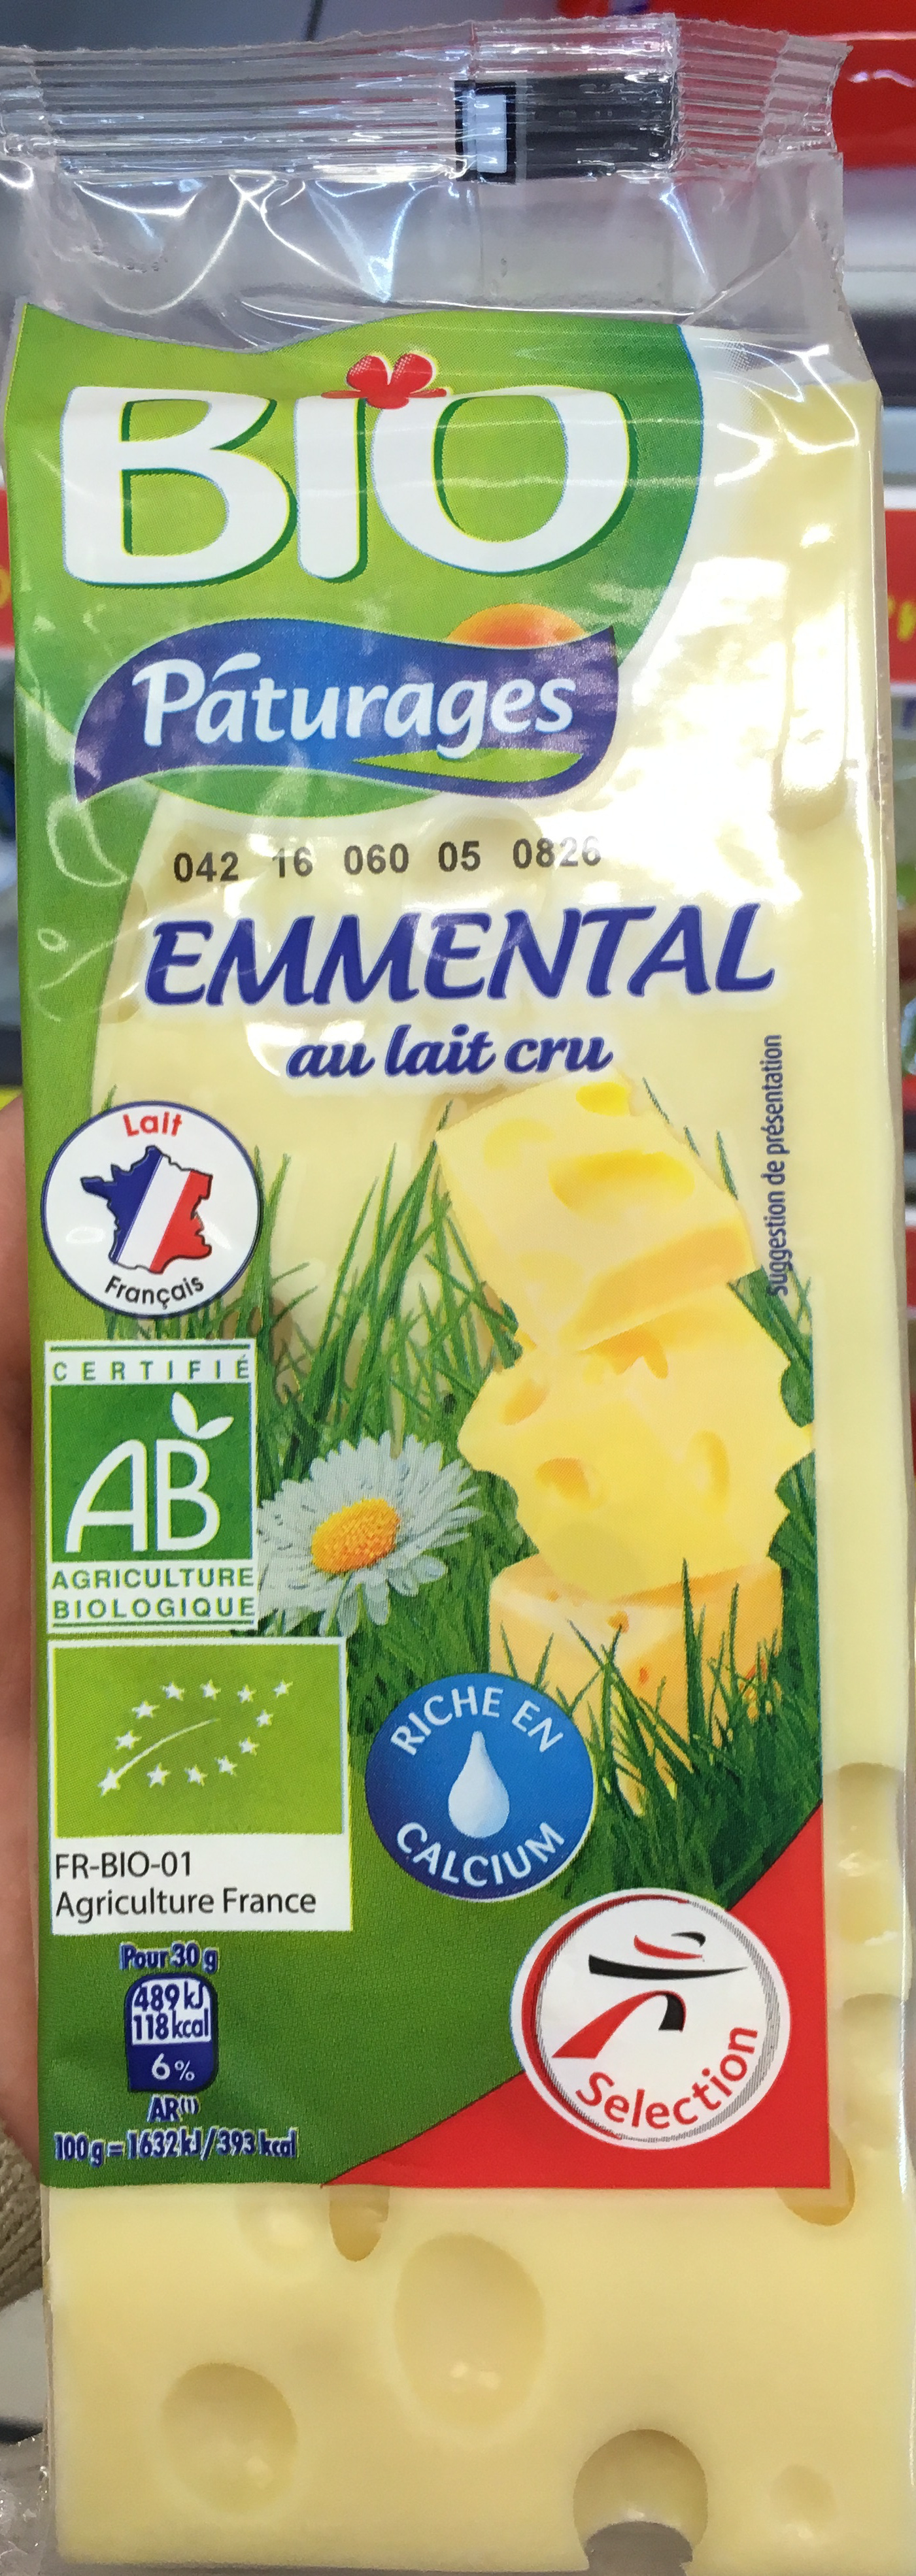 Emmental au lait cru - Product - fr